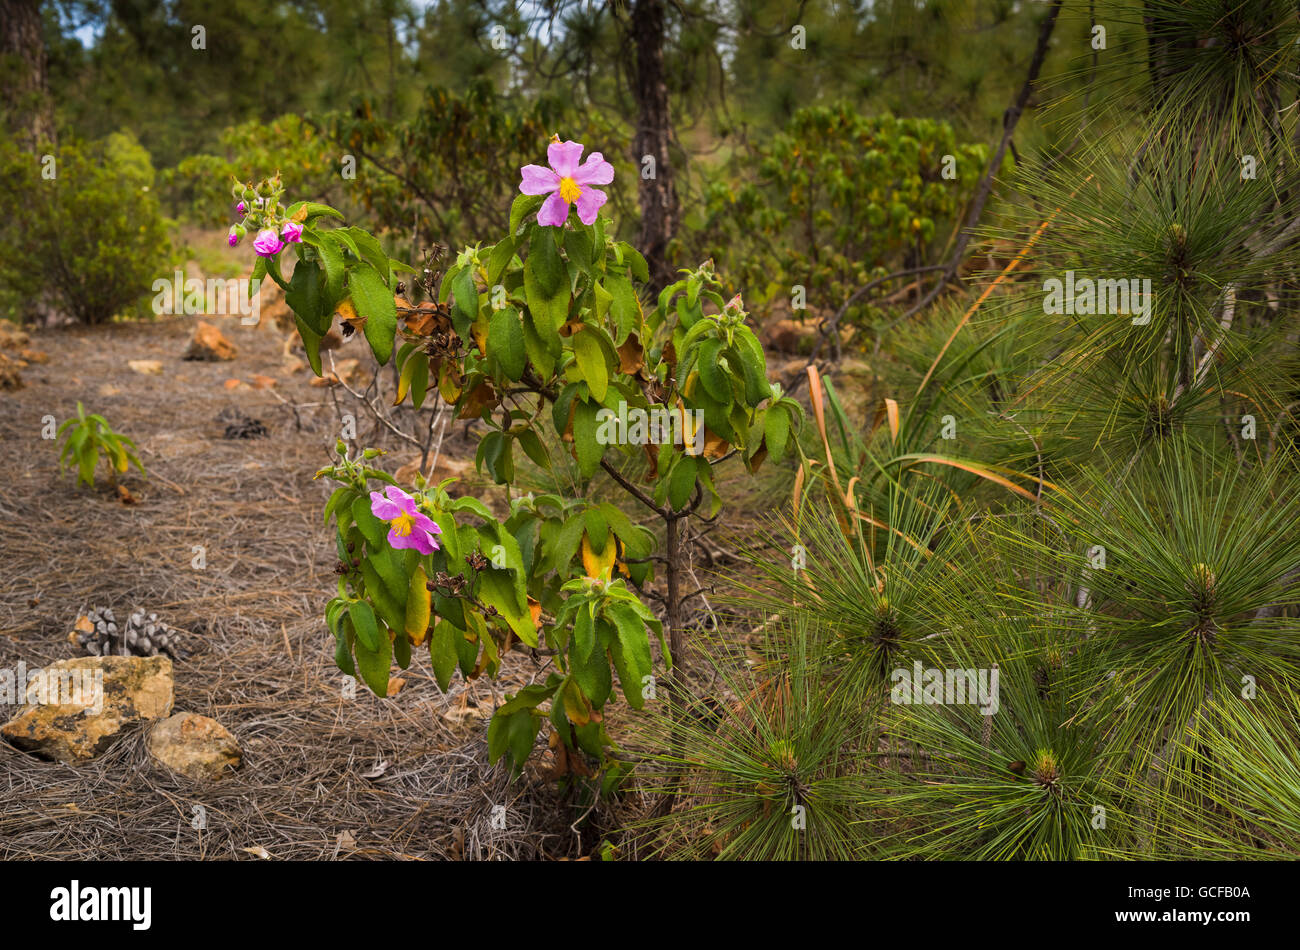 Pine forest cistus (Cistus symphytifolius), a Canarian endemic, in flower near Ifonche, Tenerife Stock Photo